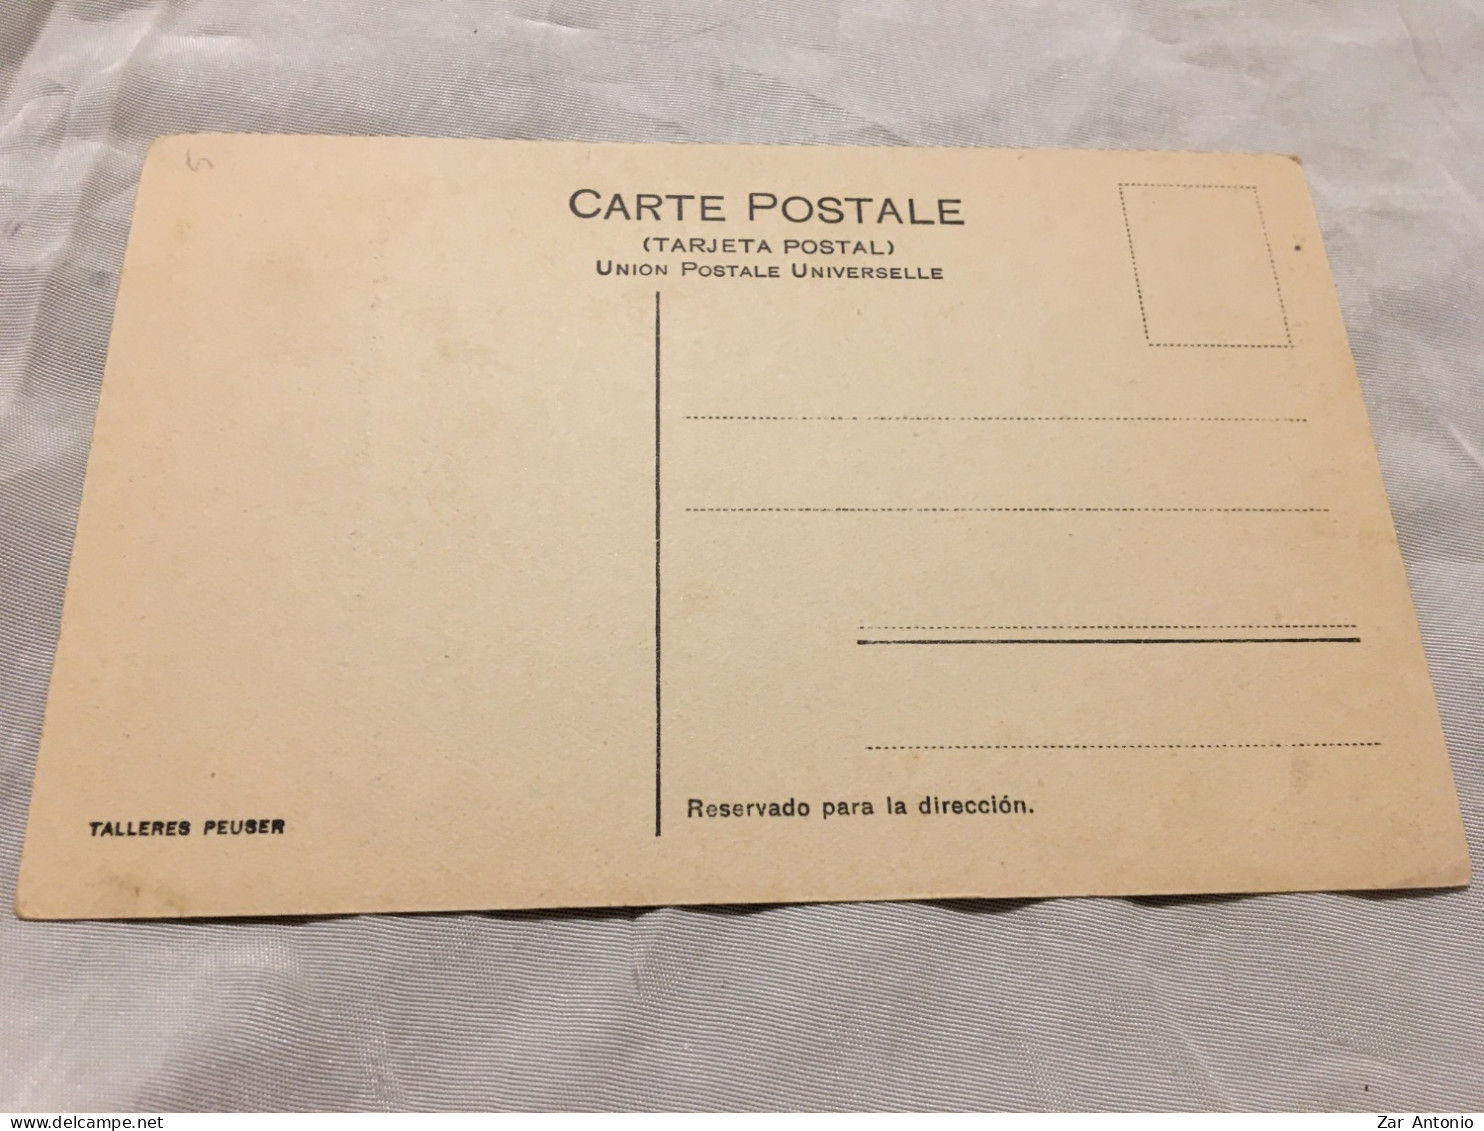 Tarjeta Postal-MISIONES Salto Lanusse  1920 Talleres Peuser - Argentinië